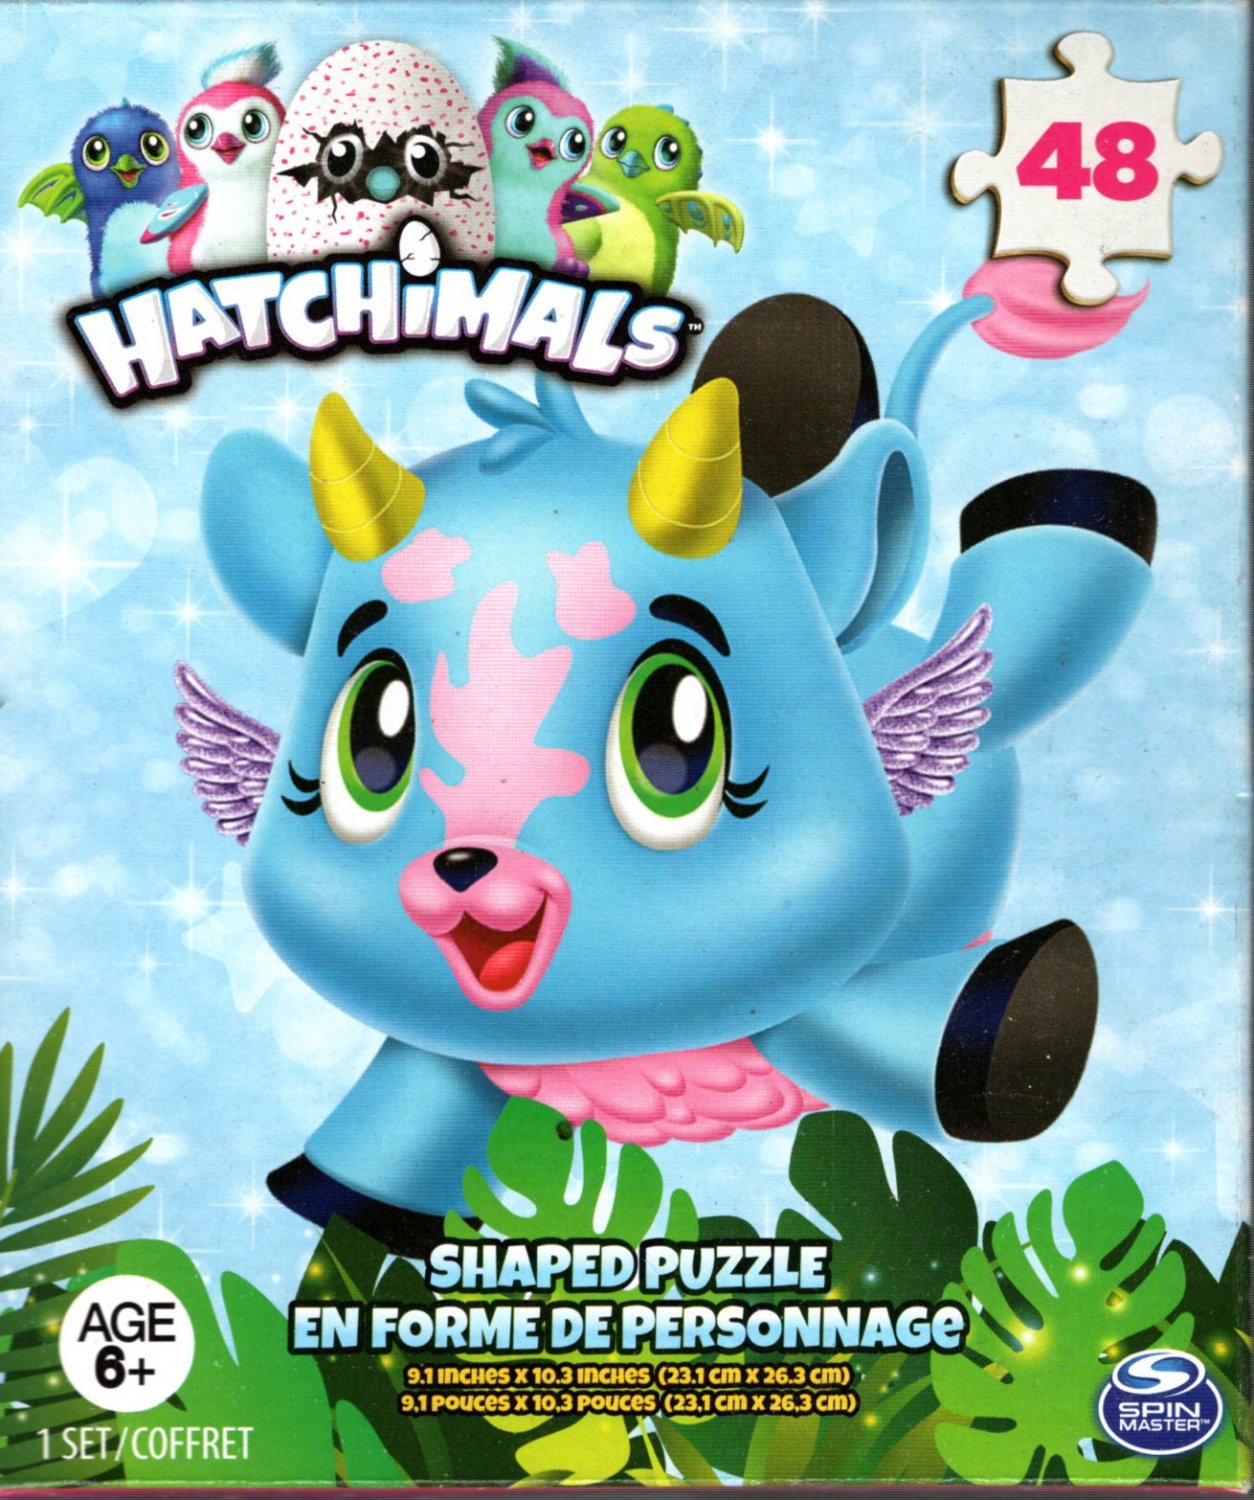 Hatchimals - 48 Shaped Puzzle v1